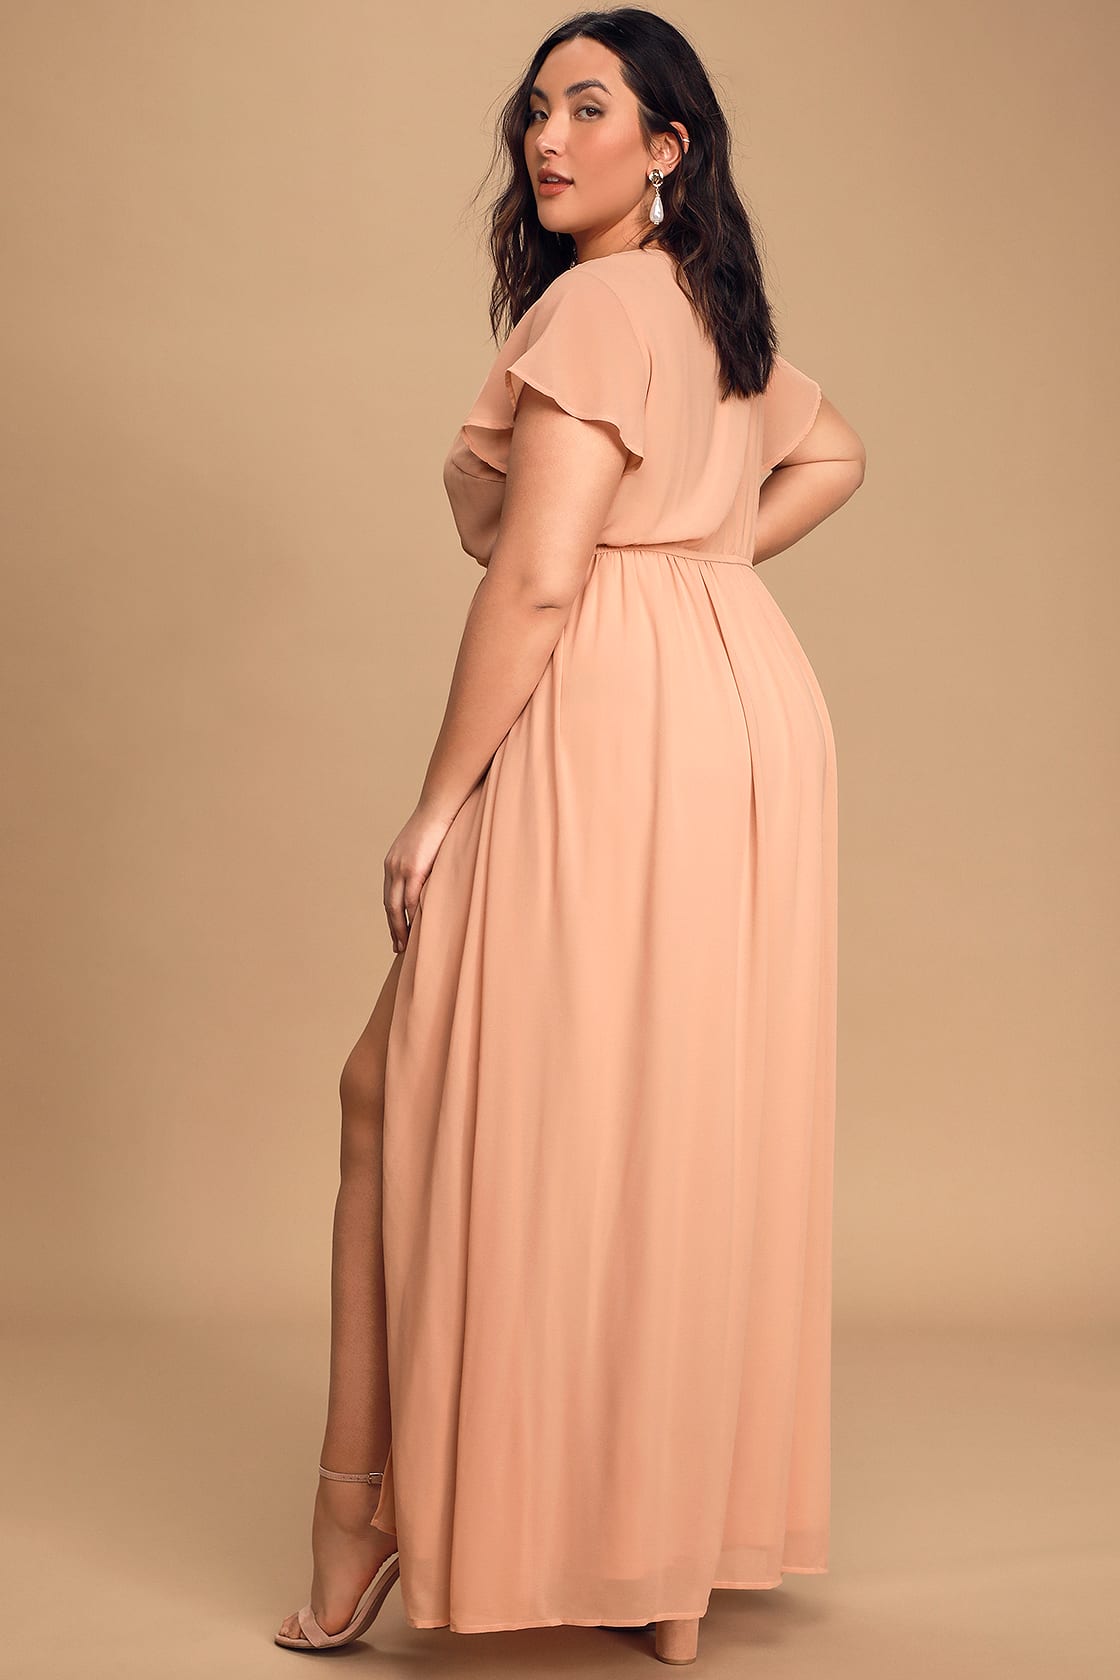 Blush Pink Plus Size Maxi Dress for Spring Wedding